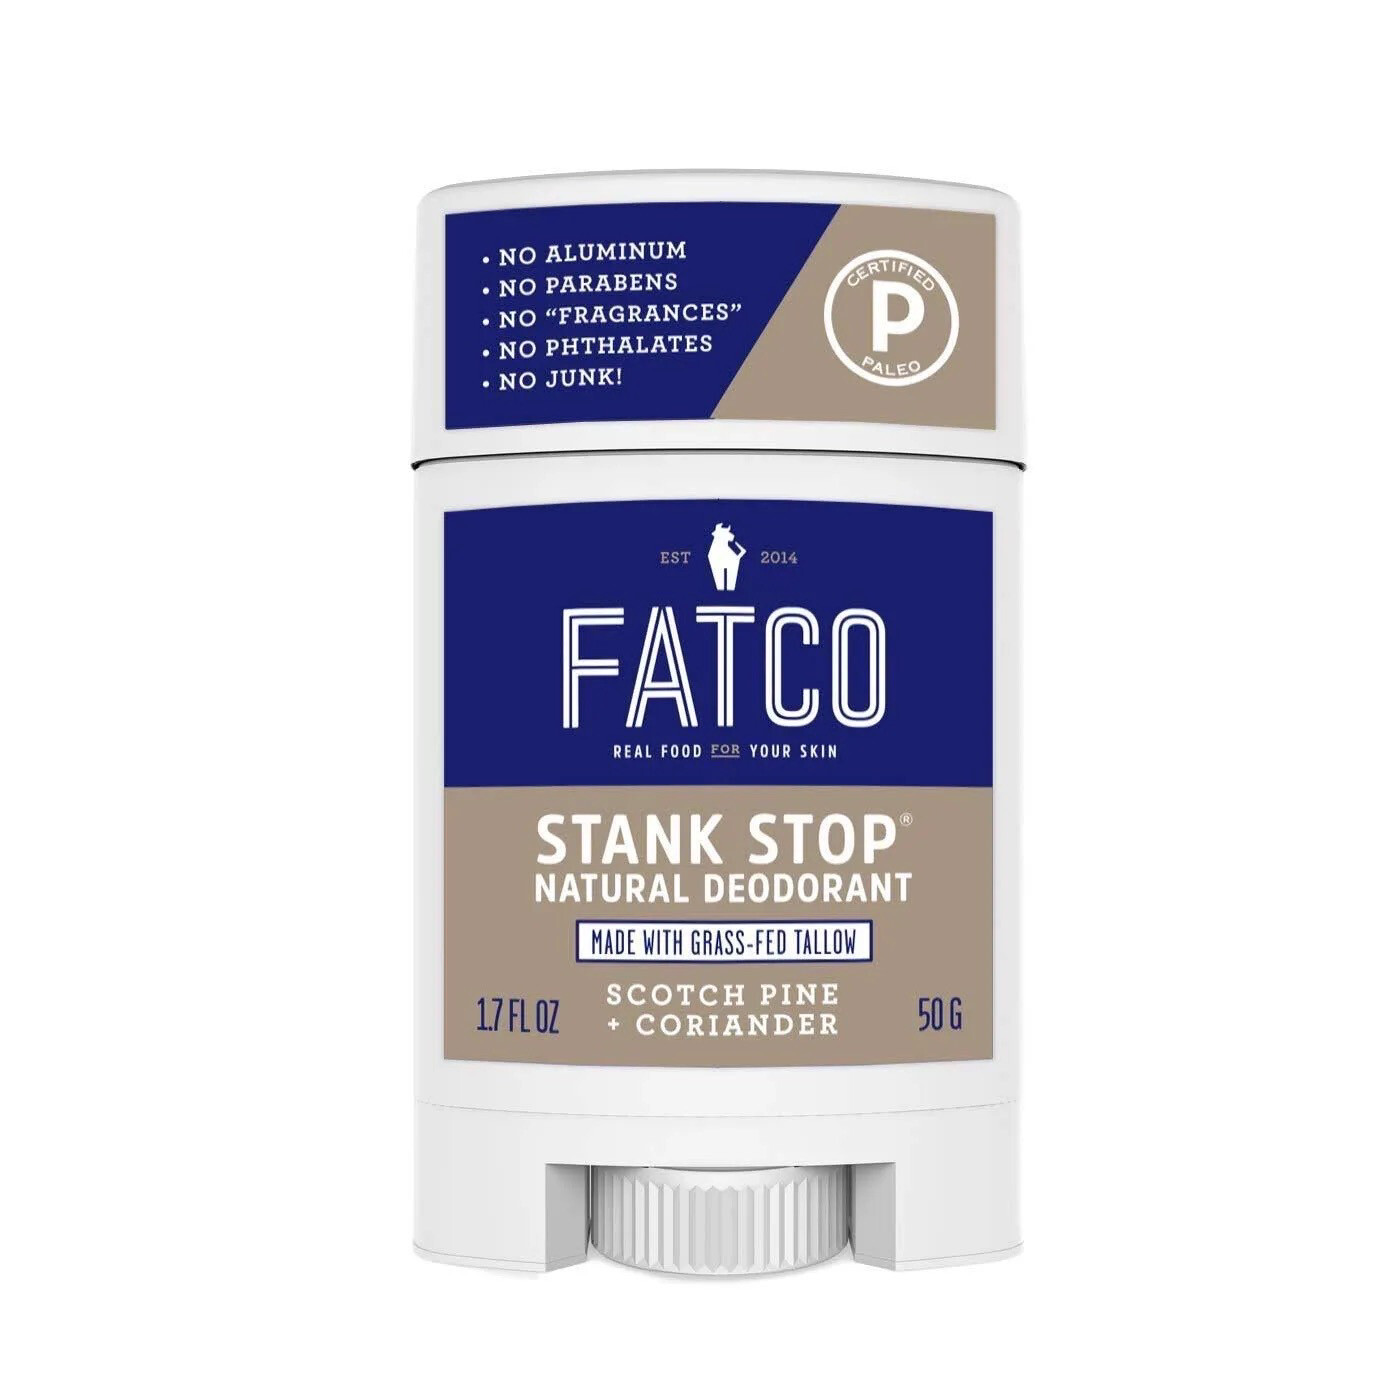 Fatco Stank Stop Deodorant Scotch Pine + Coriander 